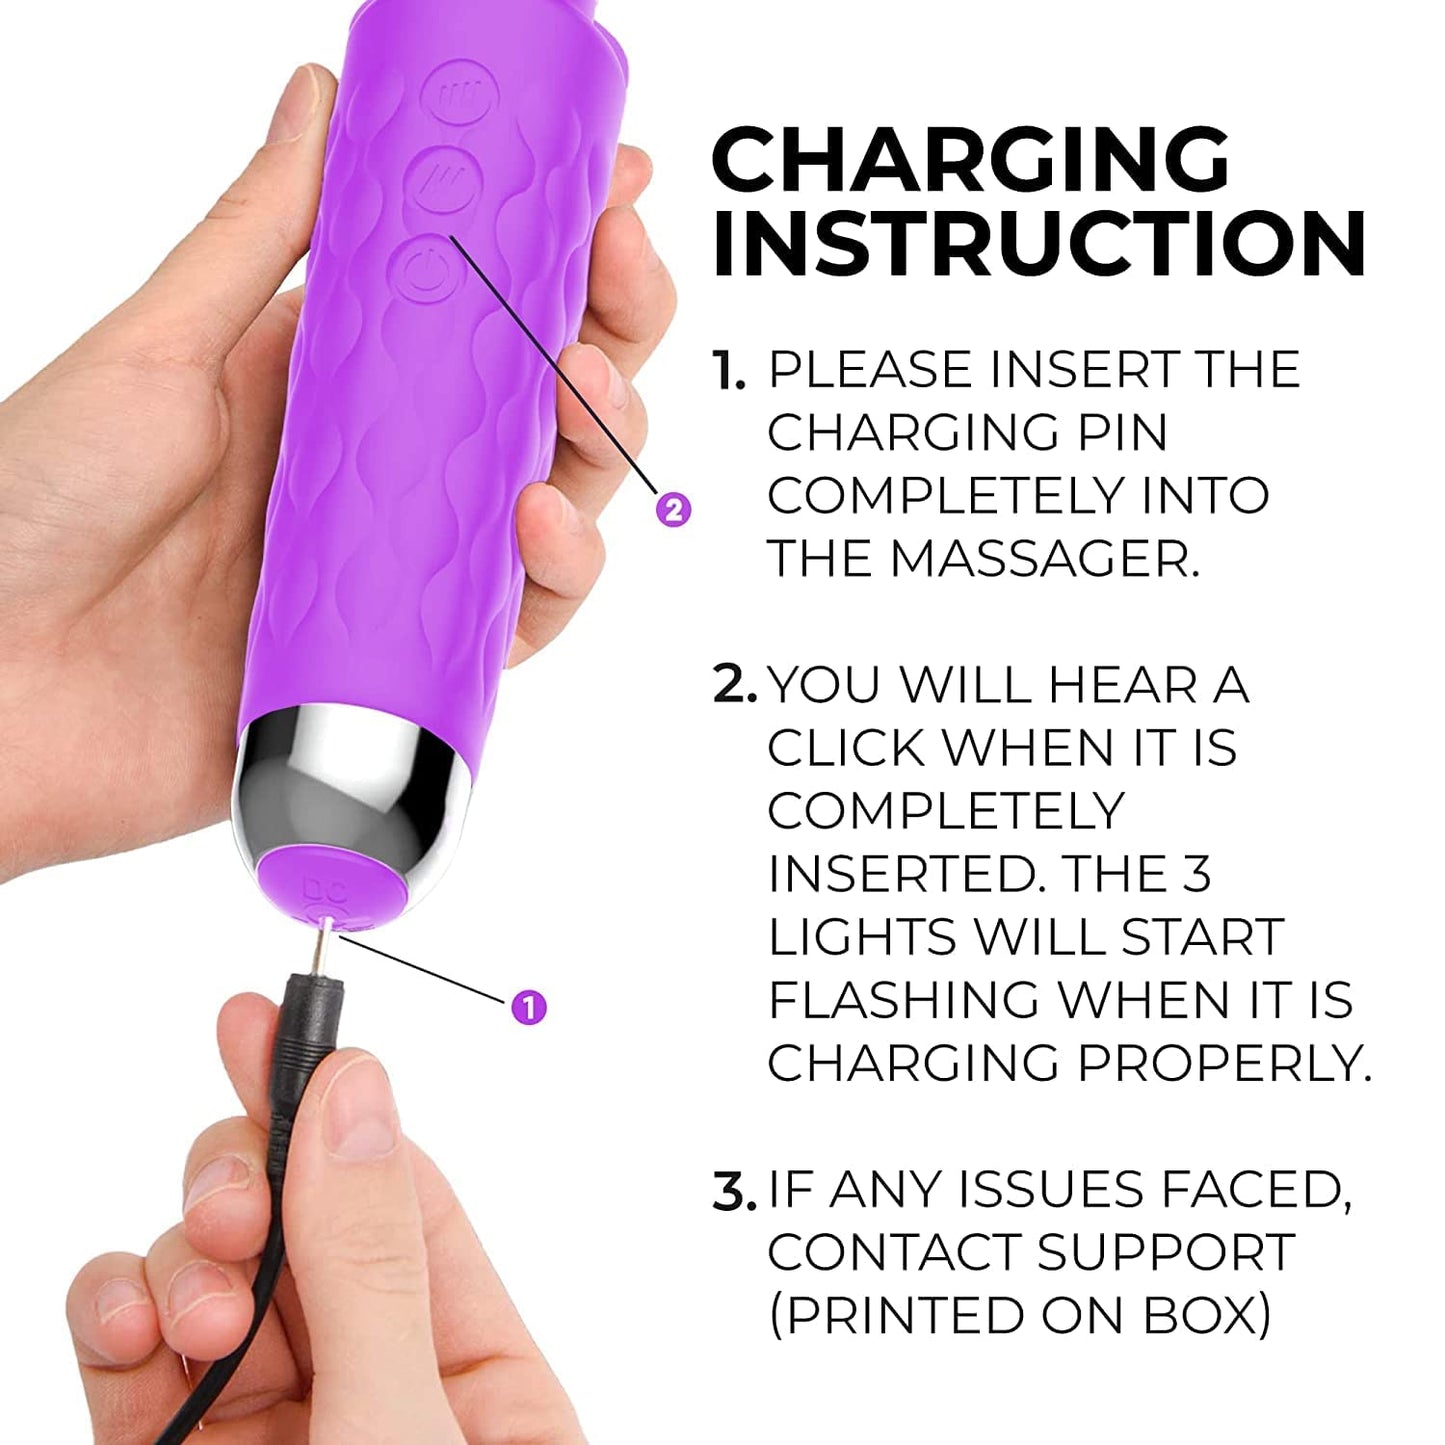 Charging instruction